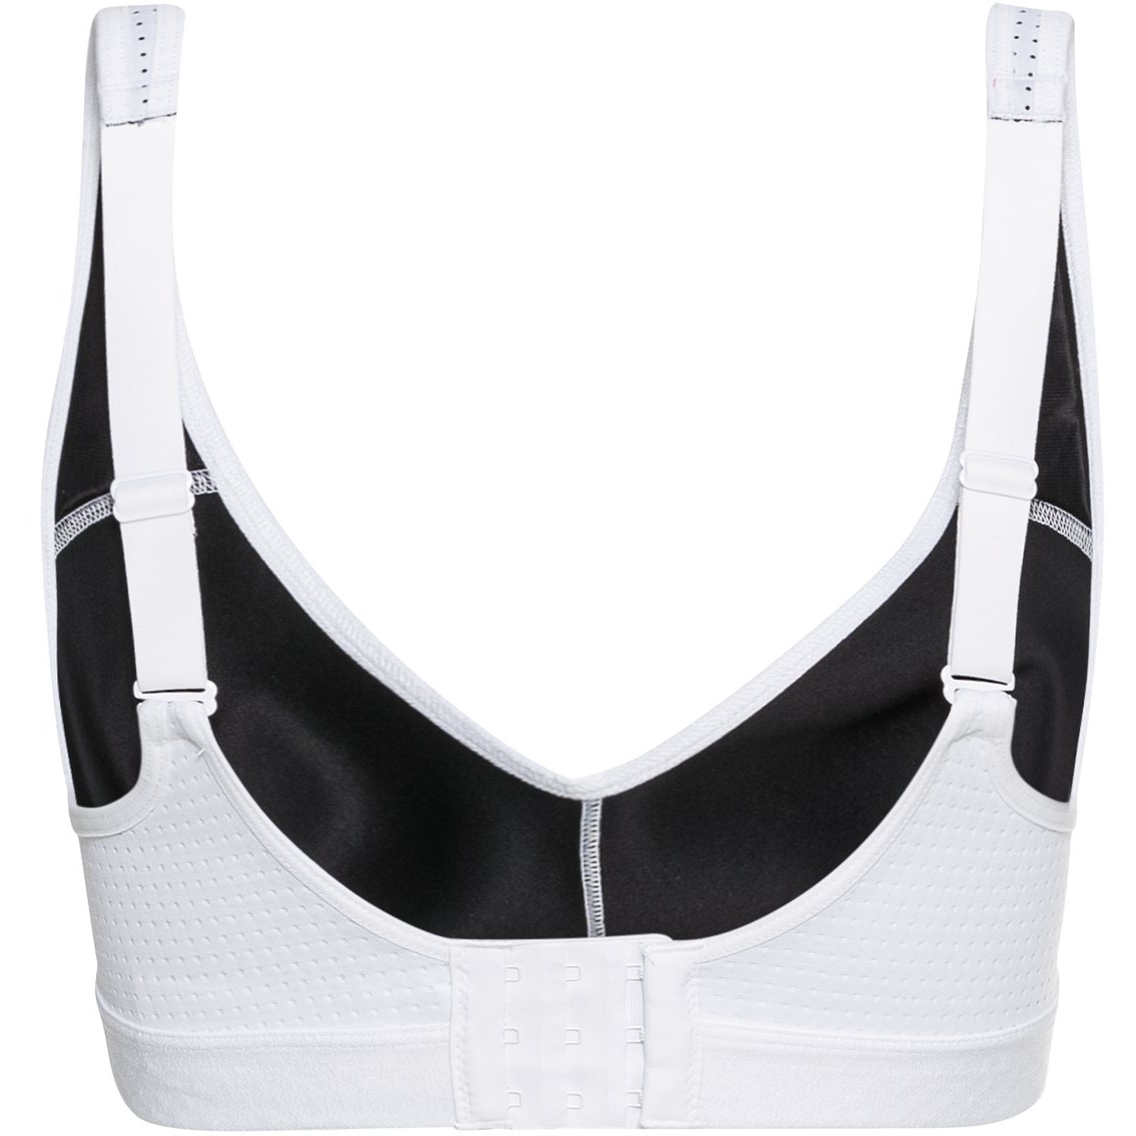 Odlo - High Support - Brassiere de sport - Femme - Blanc - FR: 85B